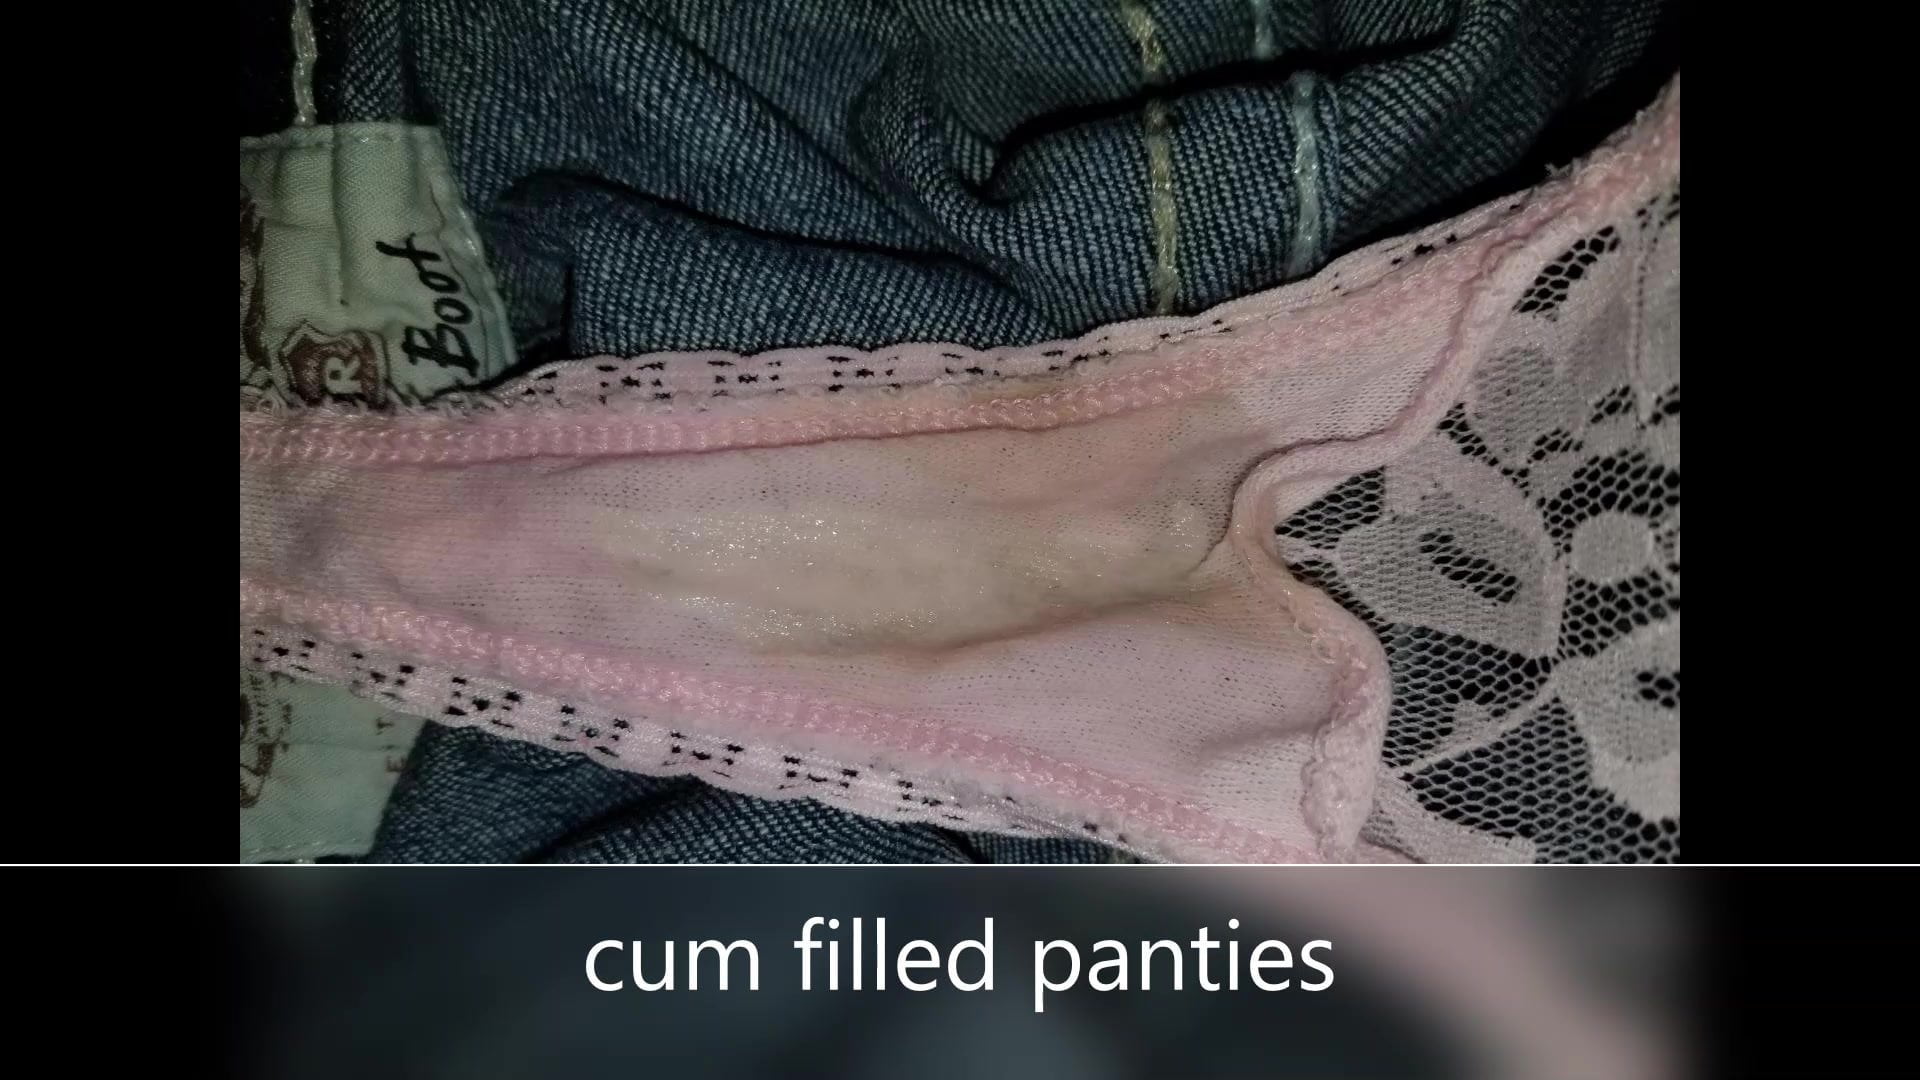 Cummed Filled Panties Pic